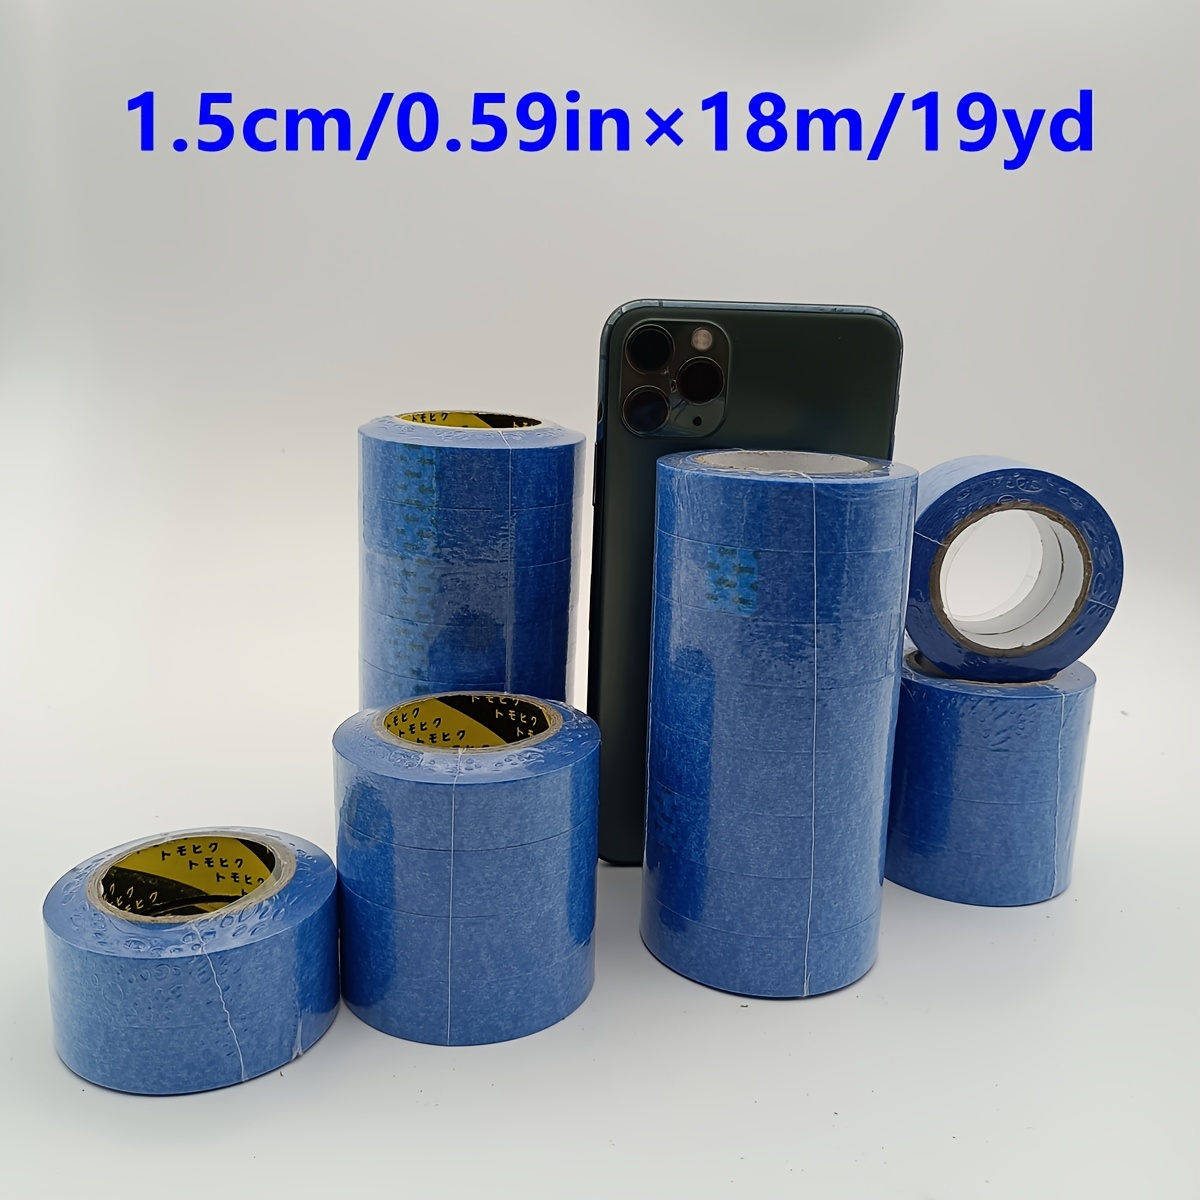 Bulk Tape, Blue Washi Tape, Multi-surface Paint Tape /19yd, Paint